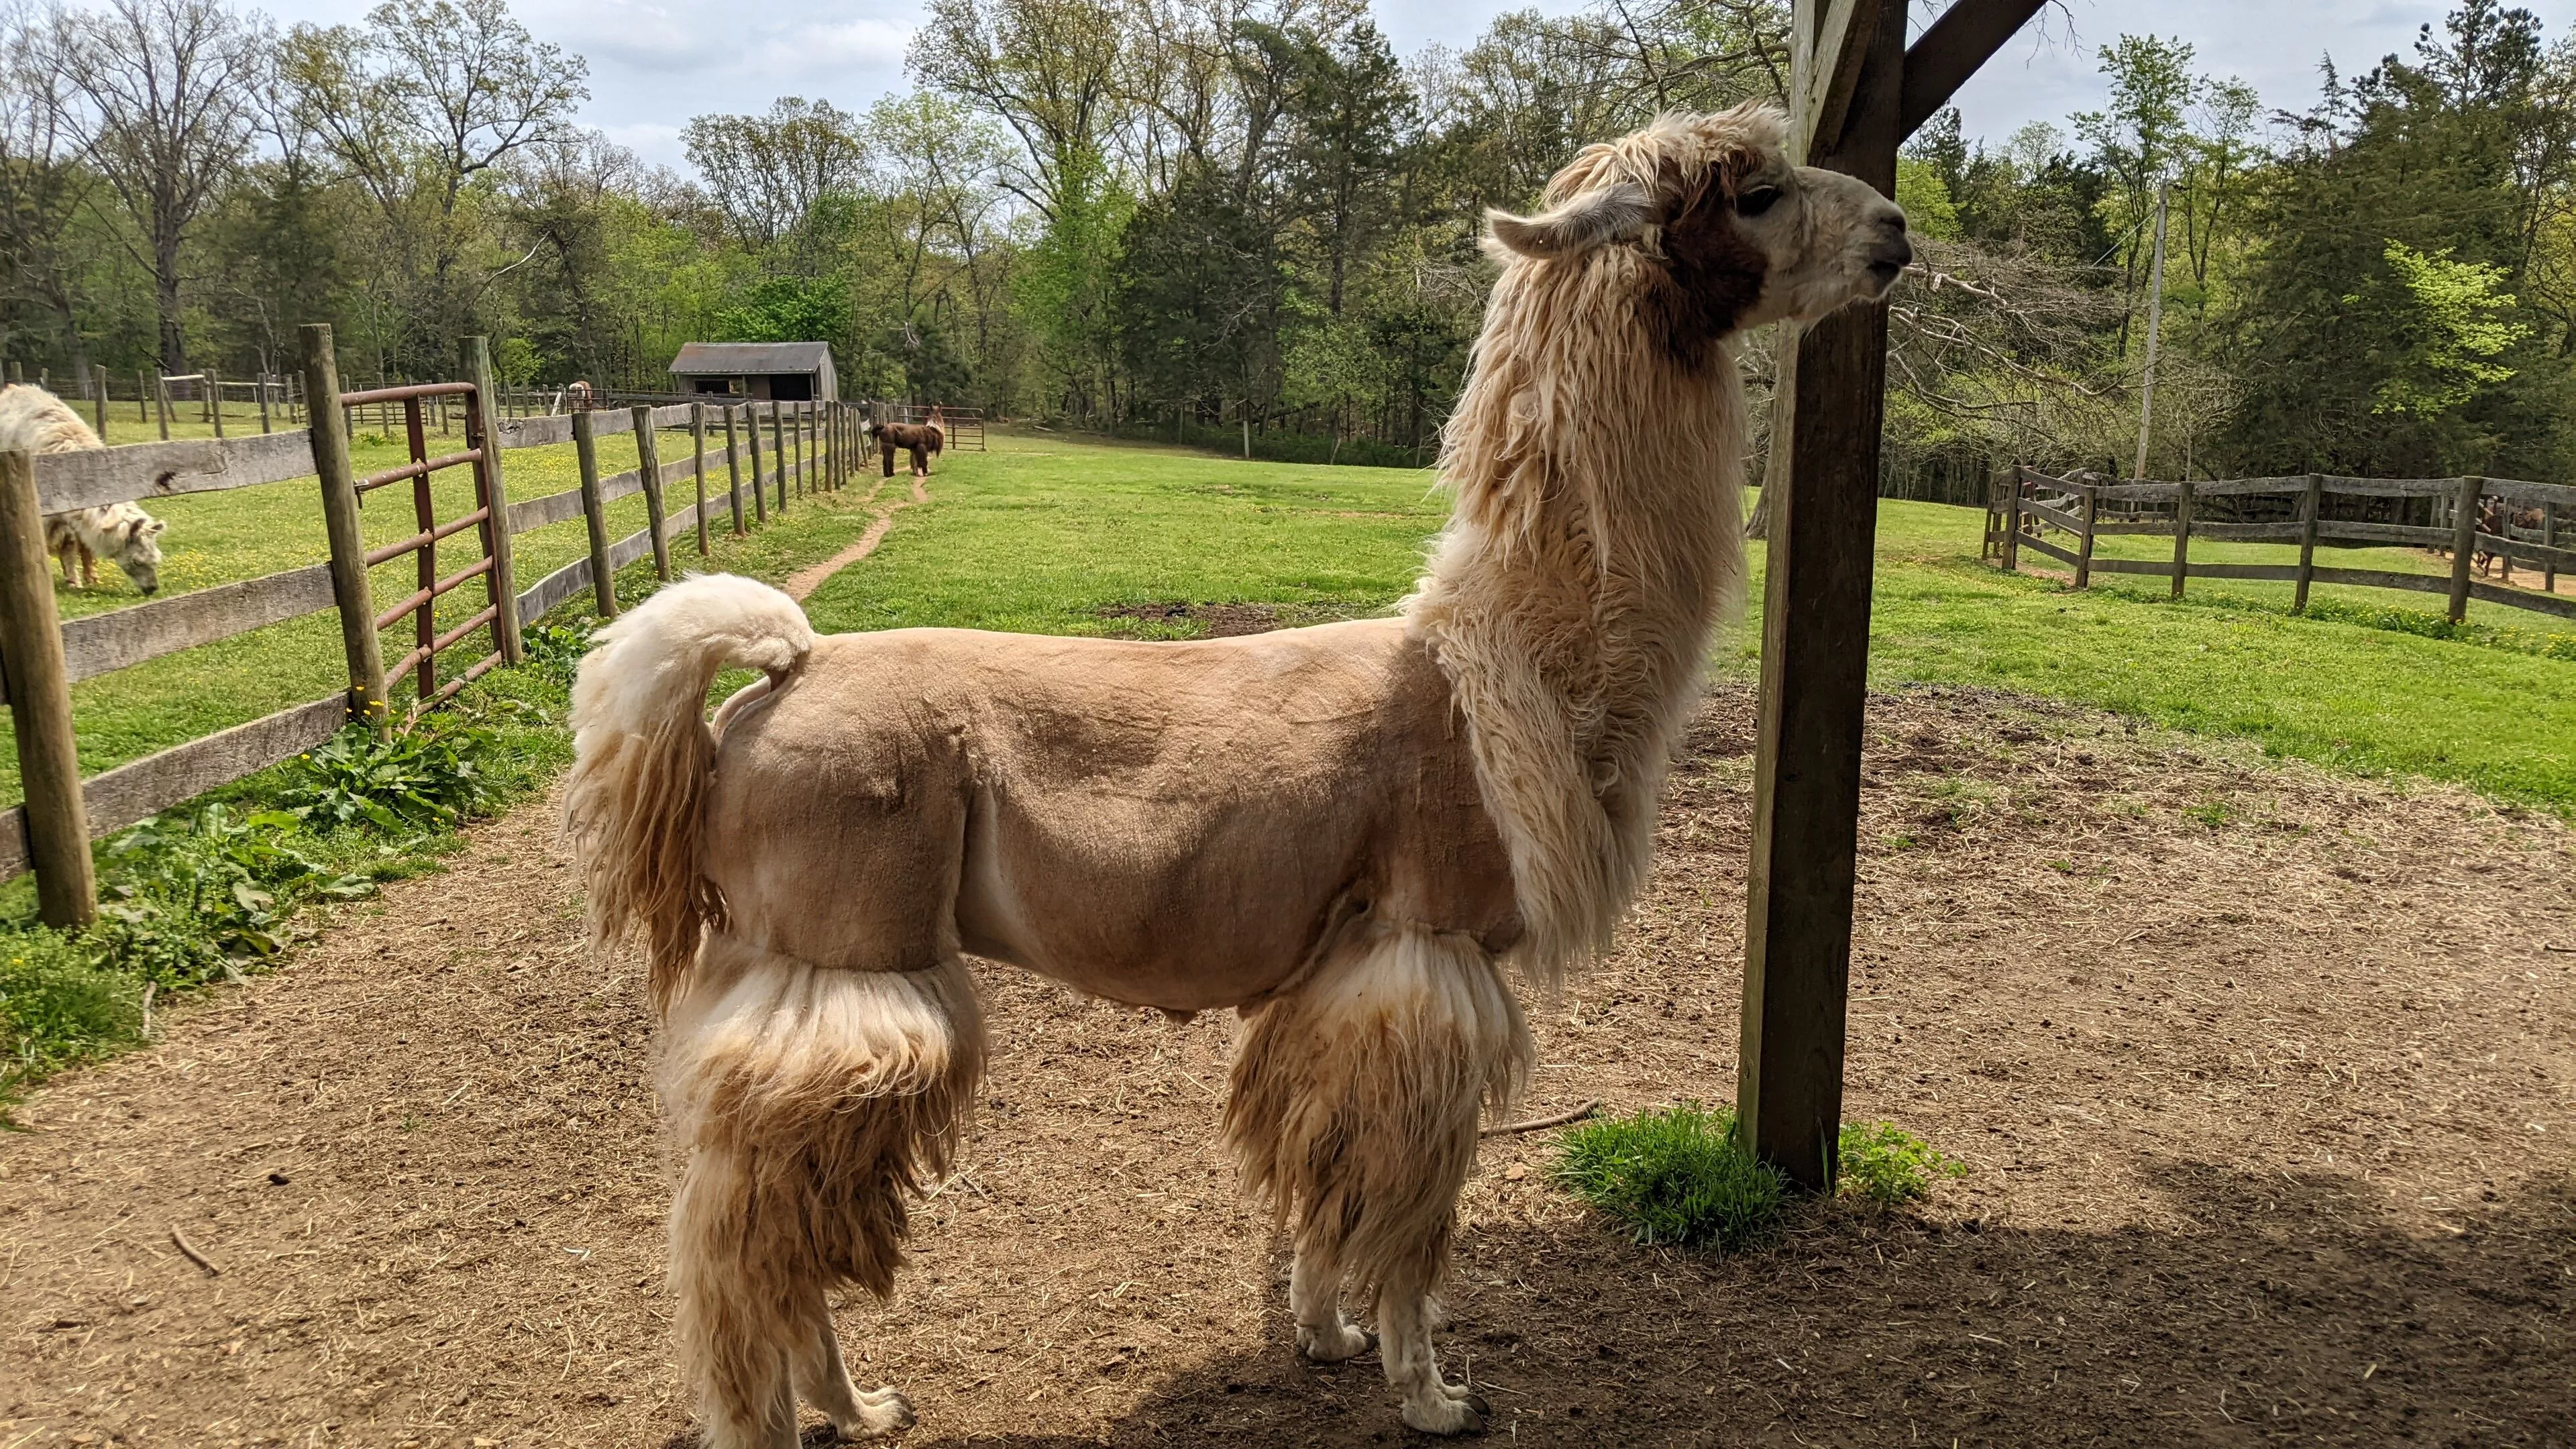 An image of a llama named Teriyaki with a fresh haircut.